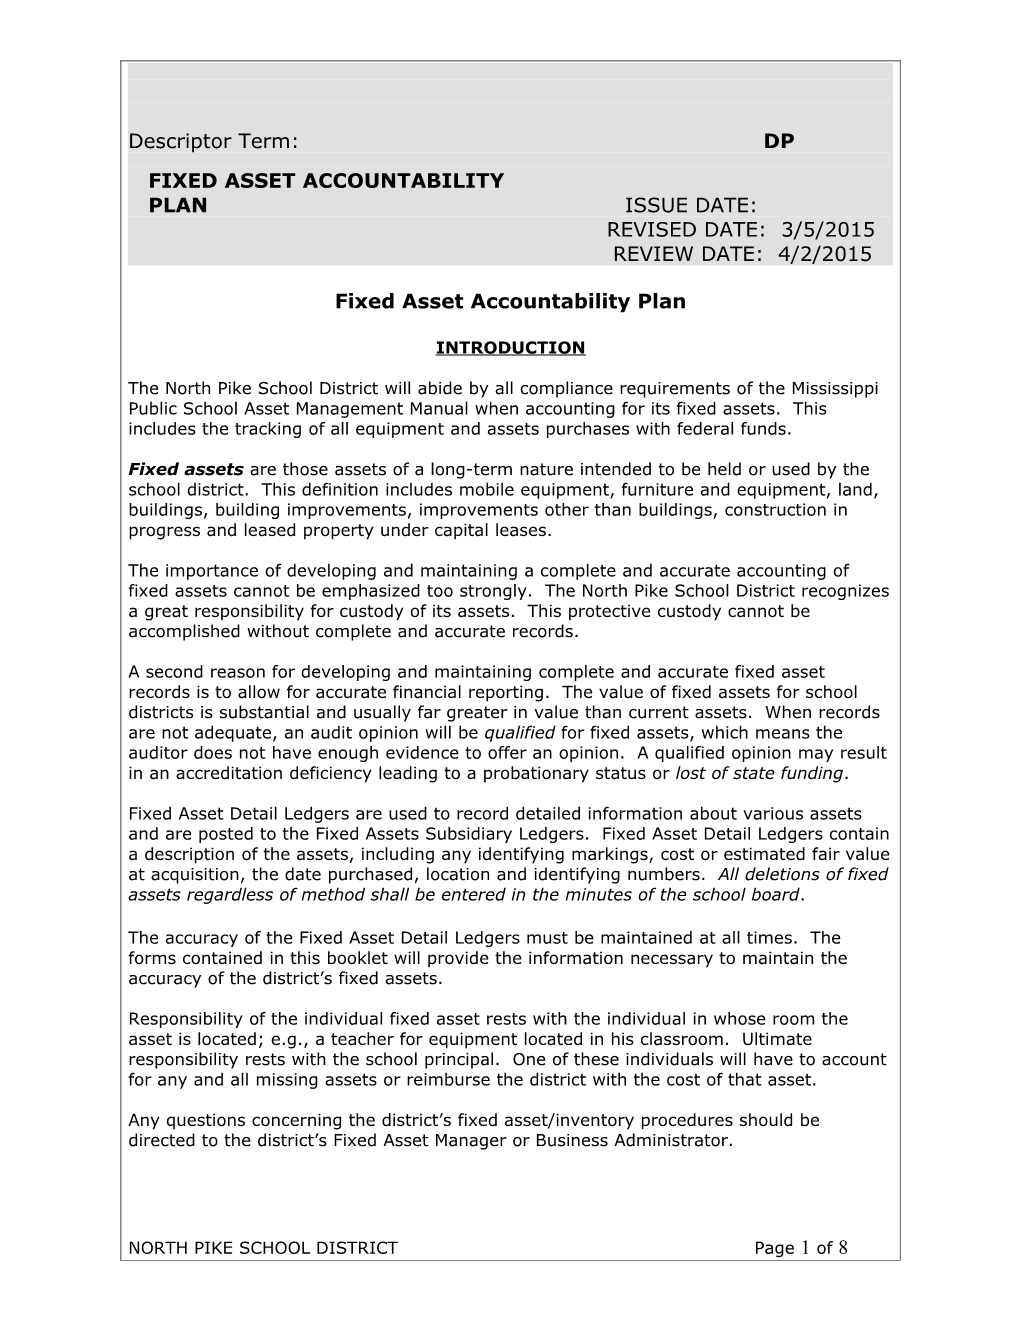 Fixed Asset Accountability